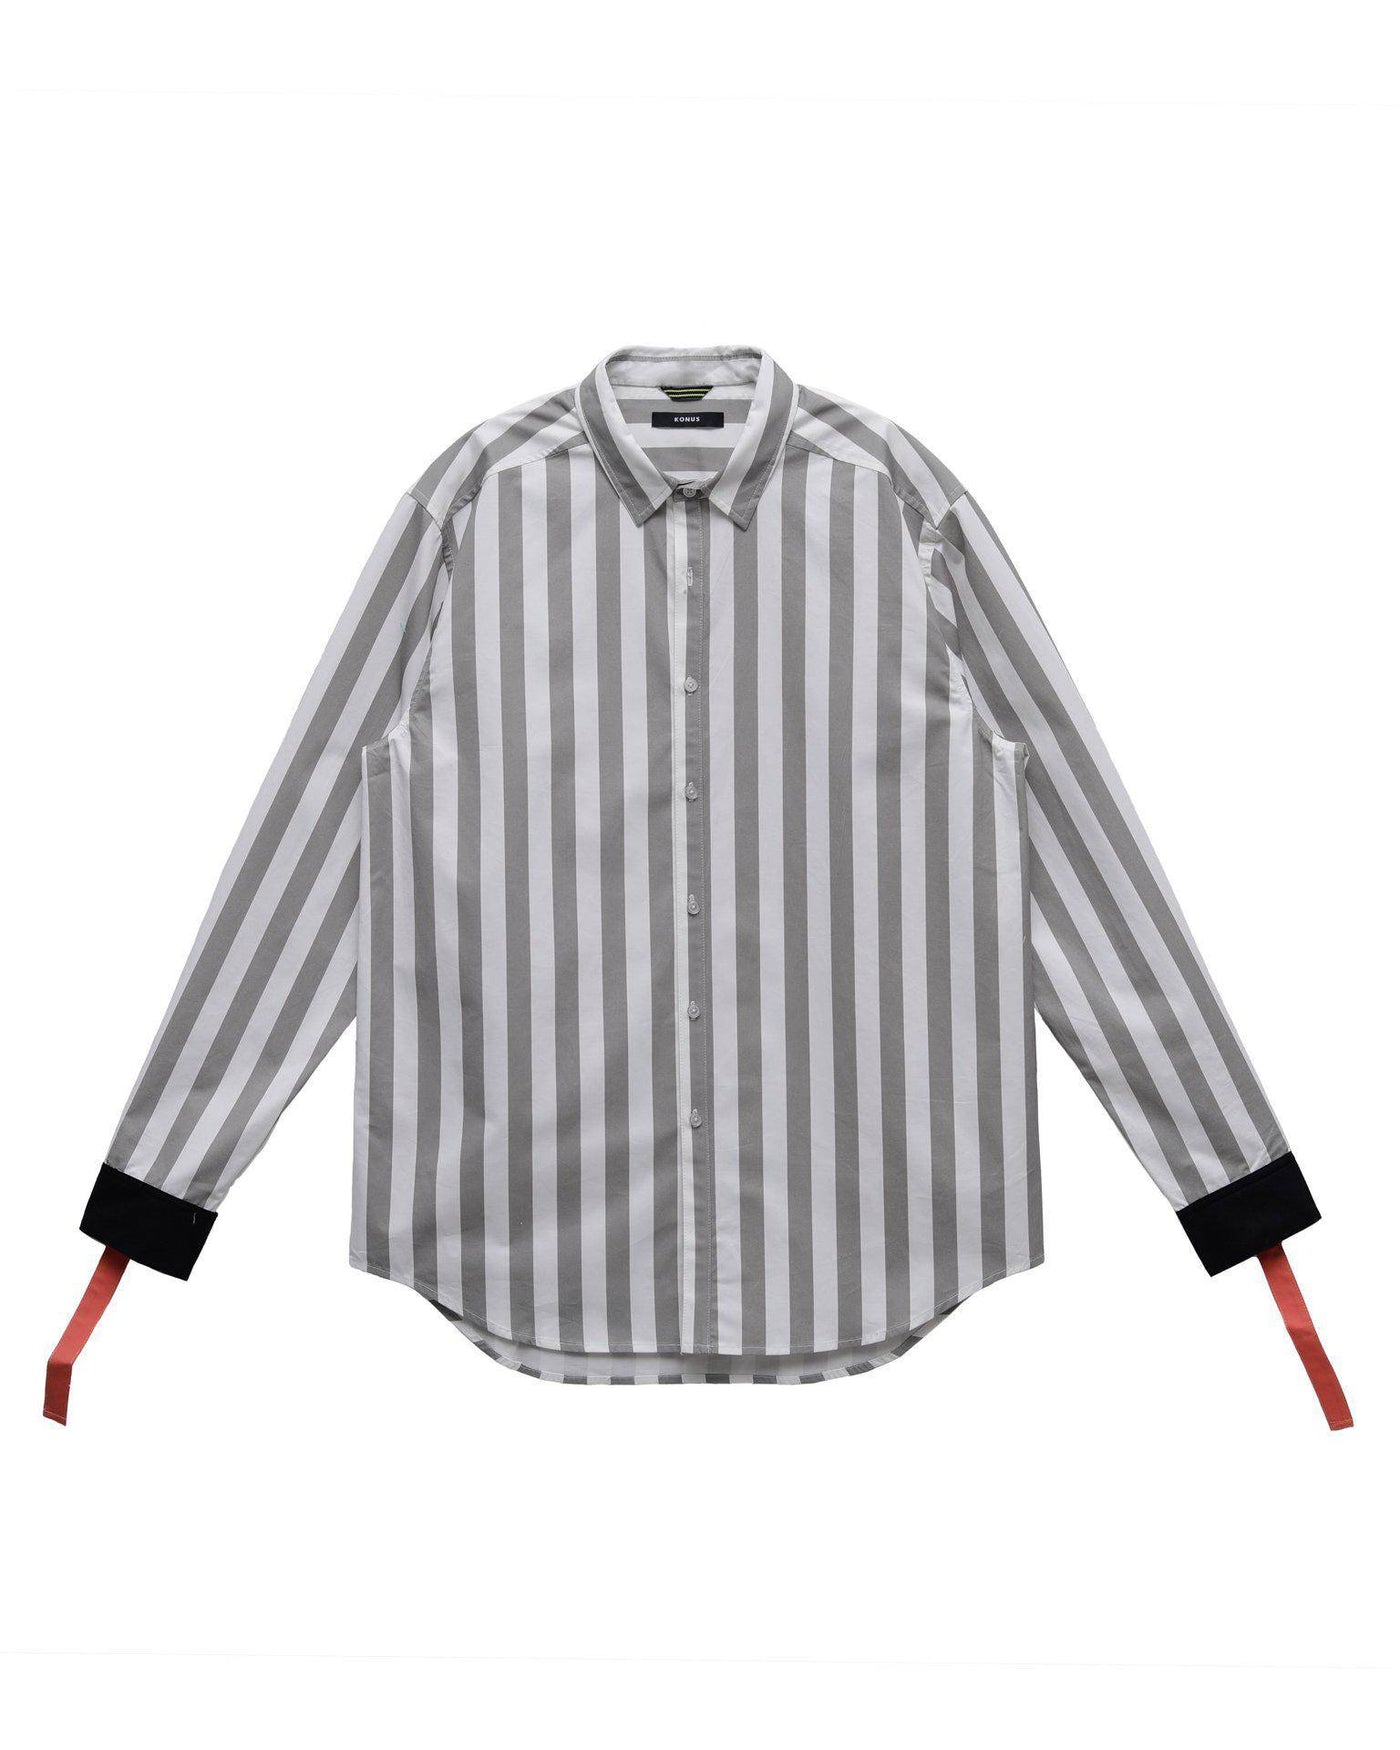 Konus Men's Striped Shirt w/ Pint Extended Placket by Shop at Konus